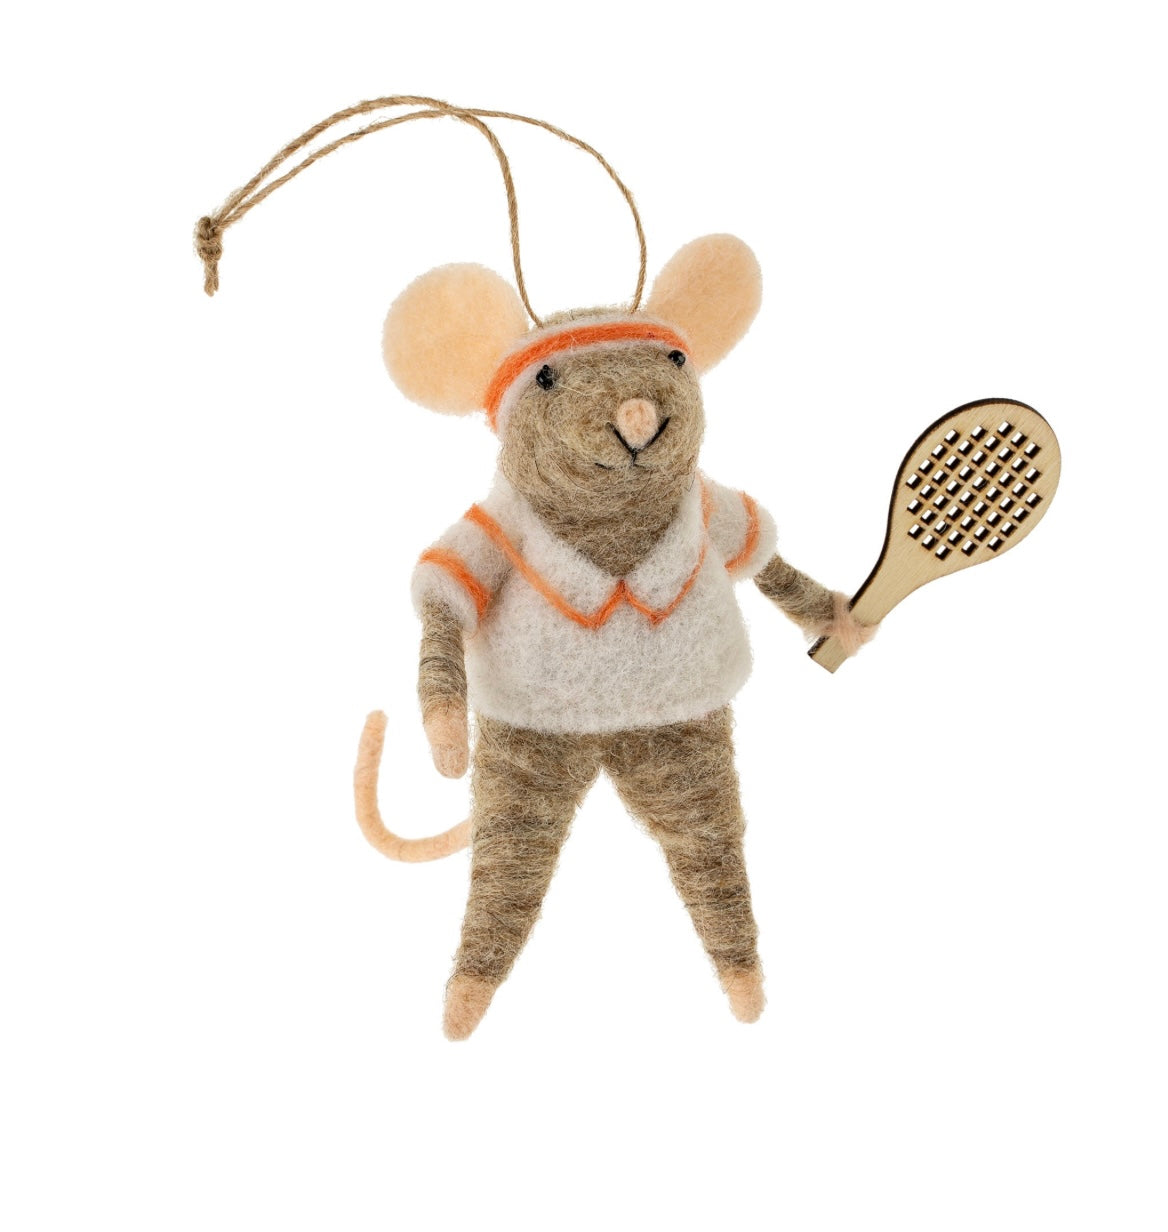 Felt Mouse Ornament: “Serena Mouse”